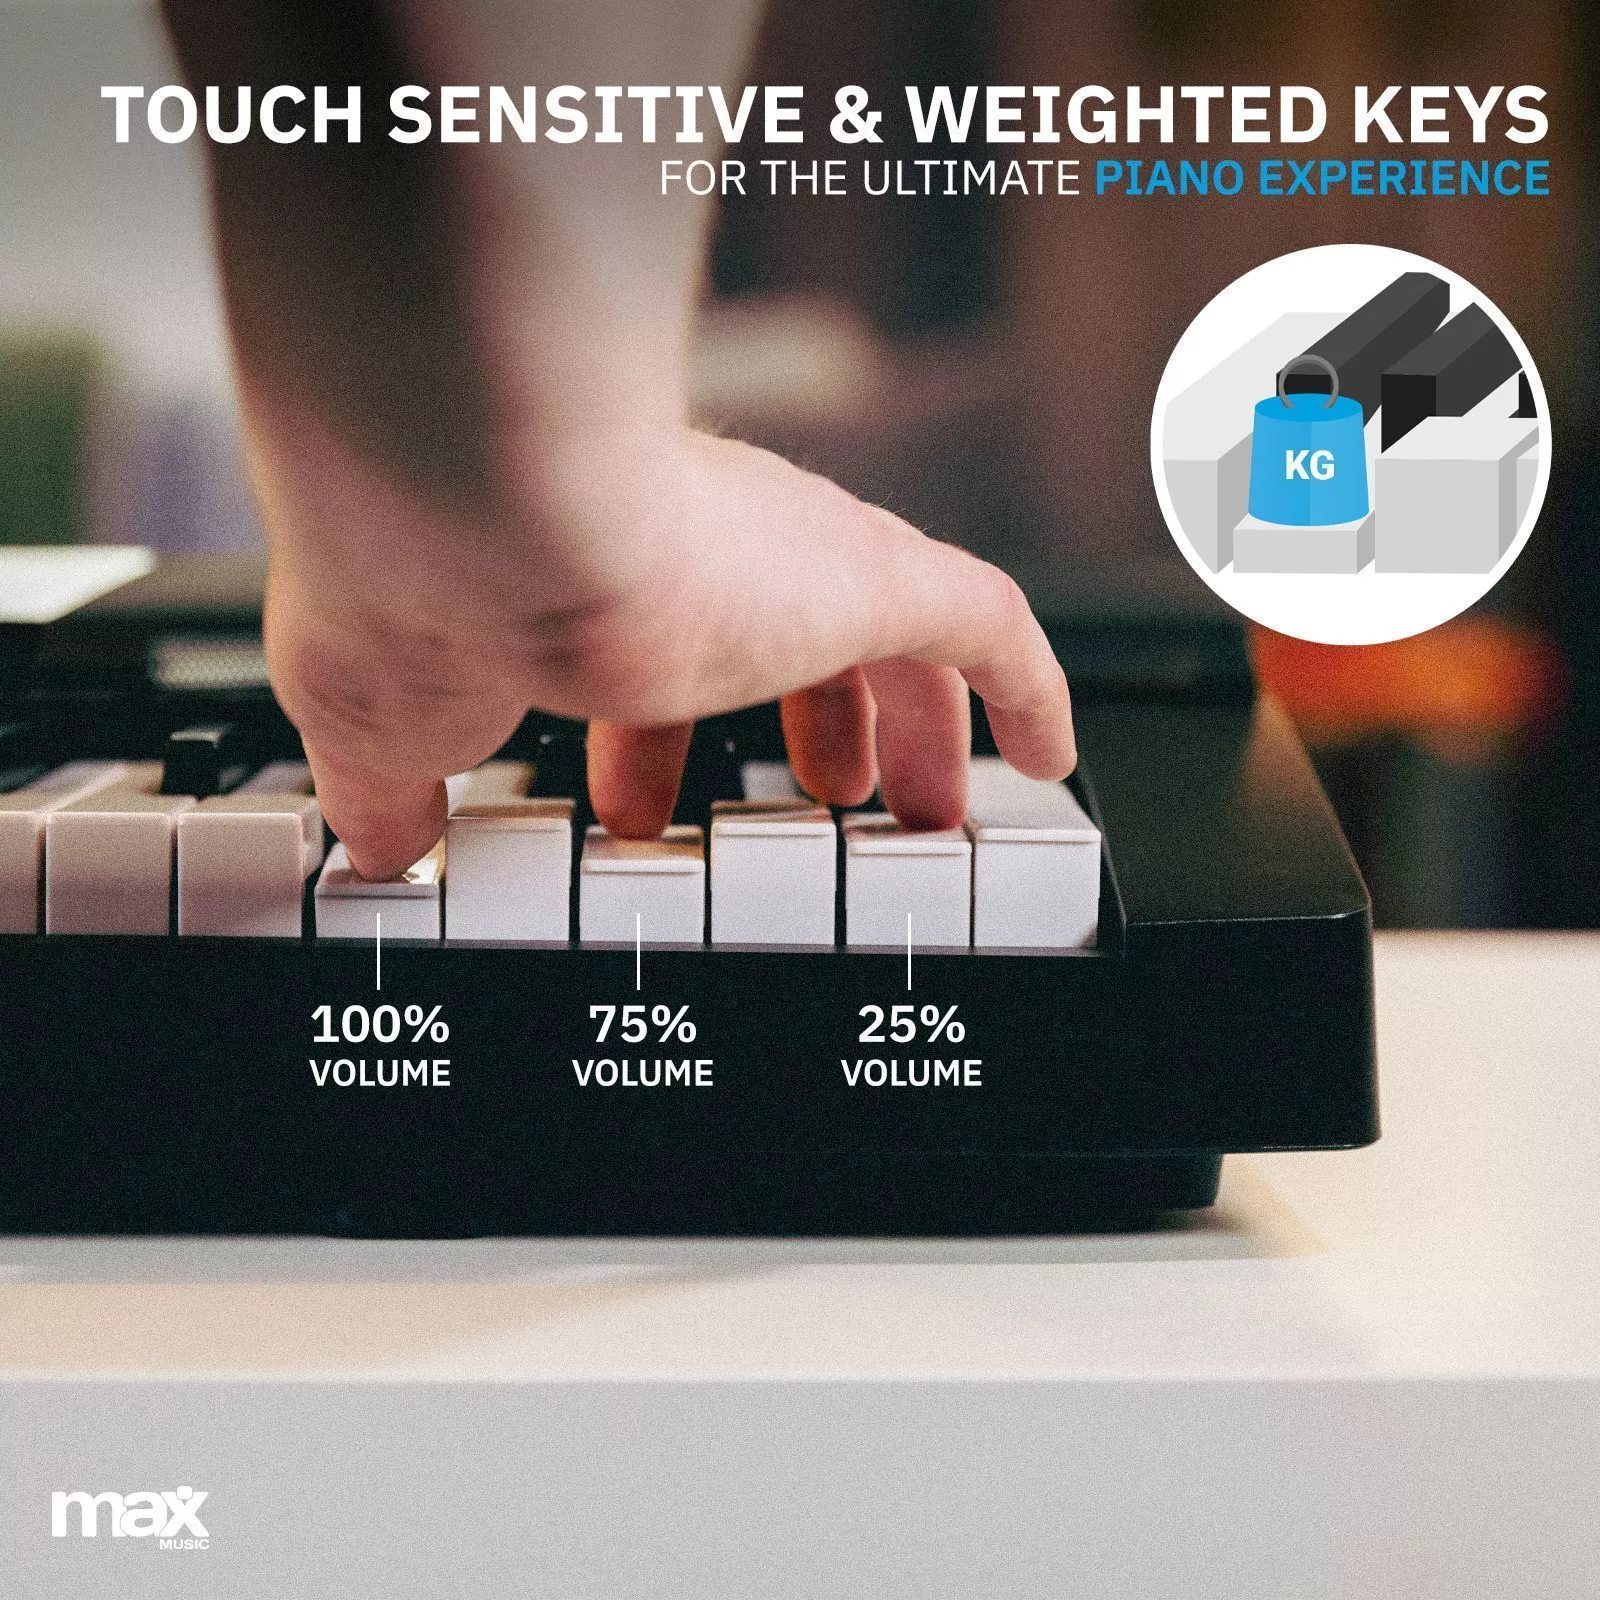 Max retourdeals keyboards|keyboards